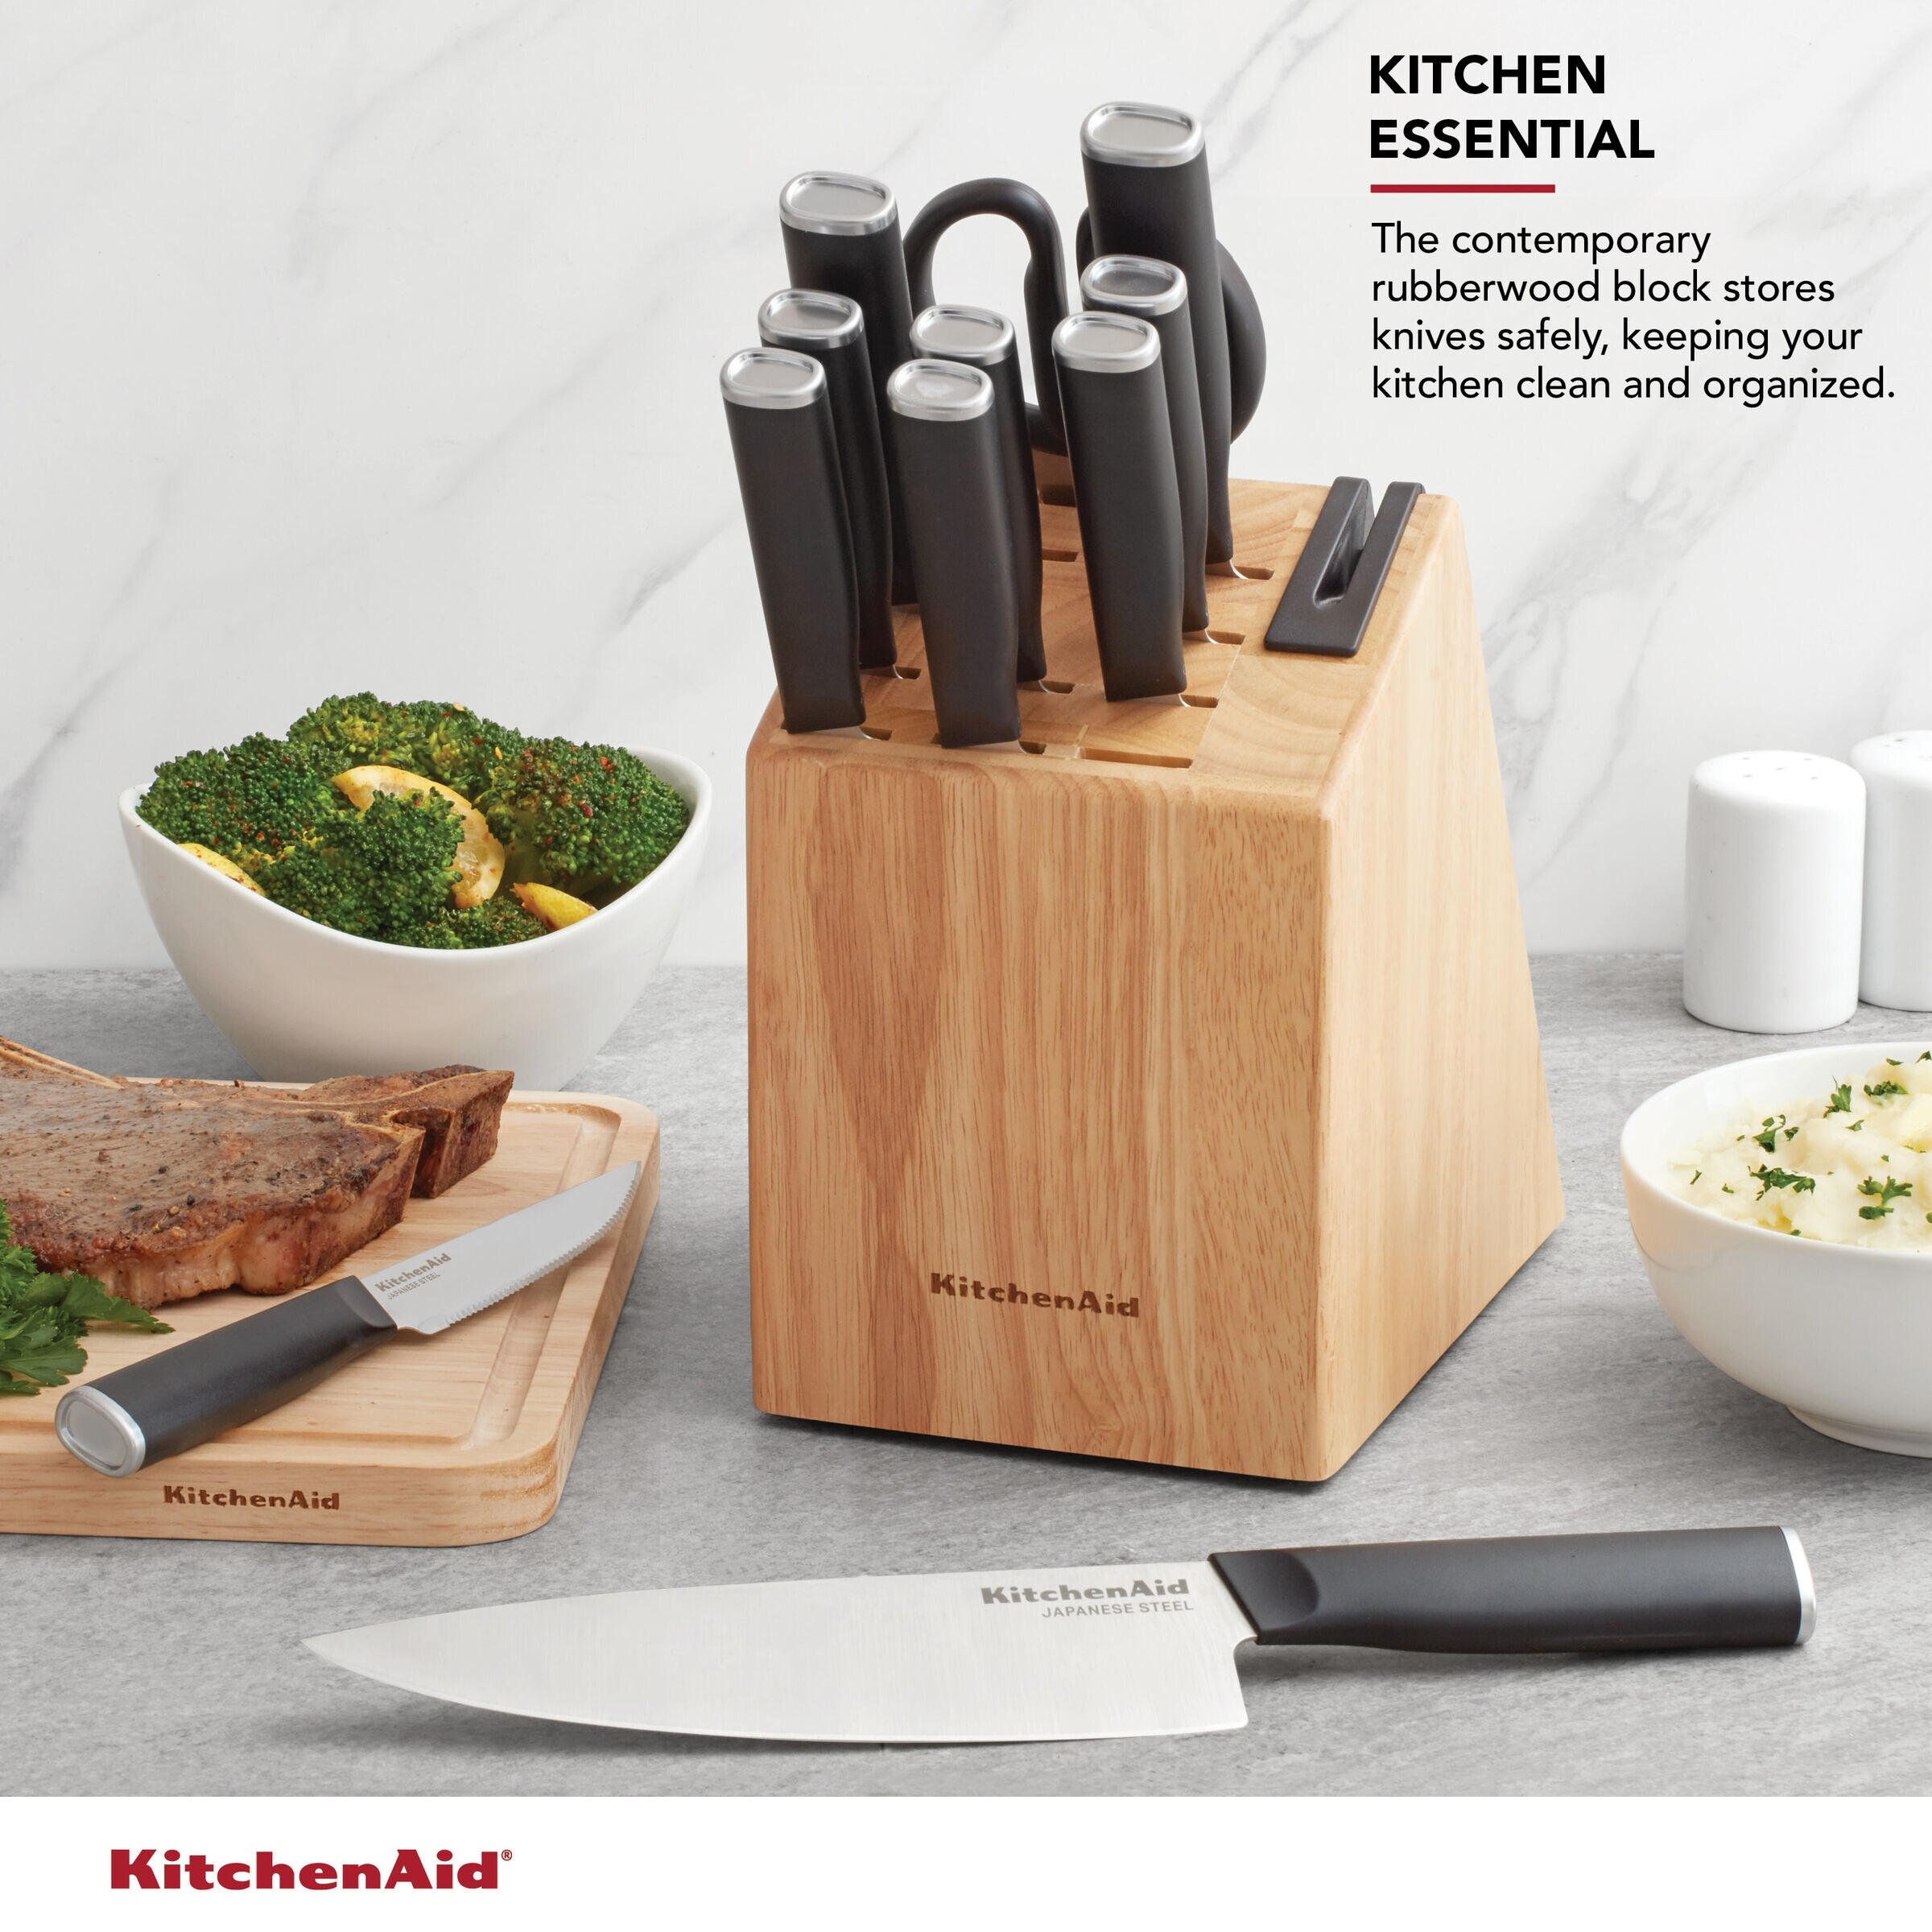 Kitchenaid knife set • Compare & find best price now »